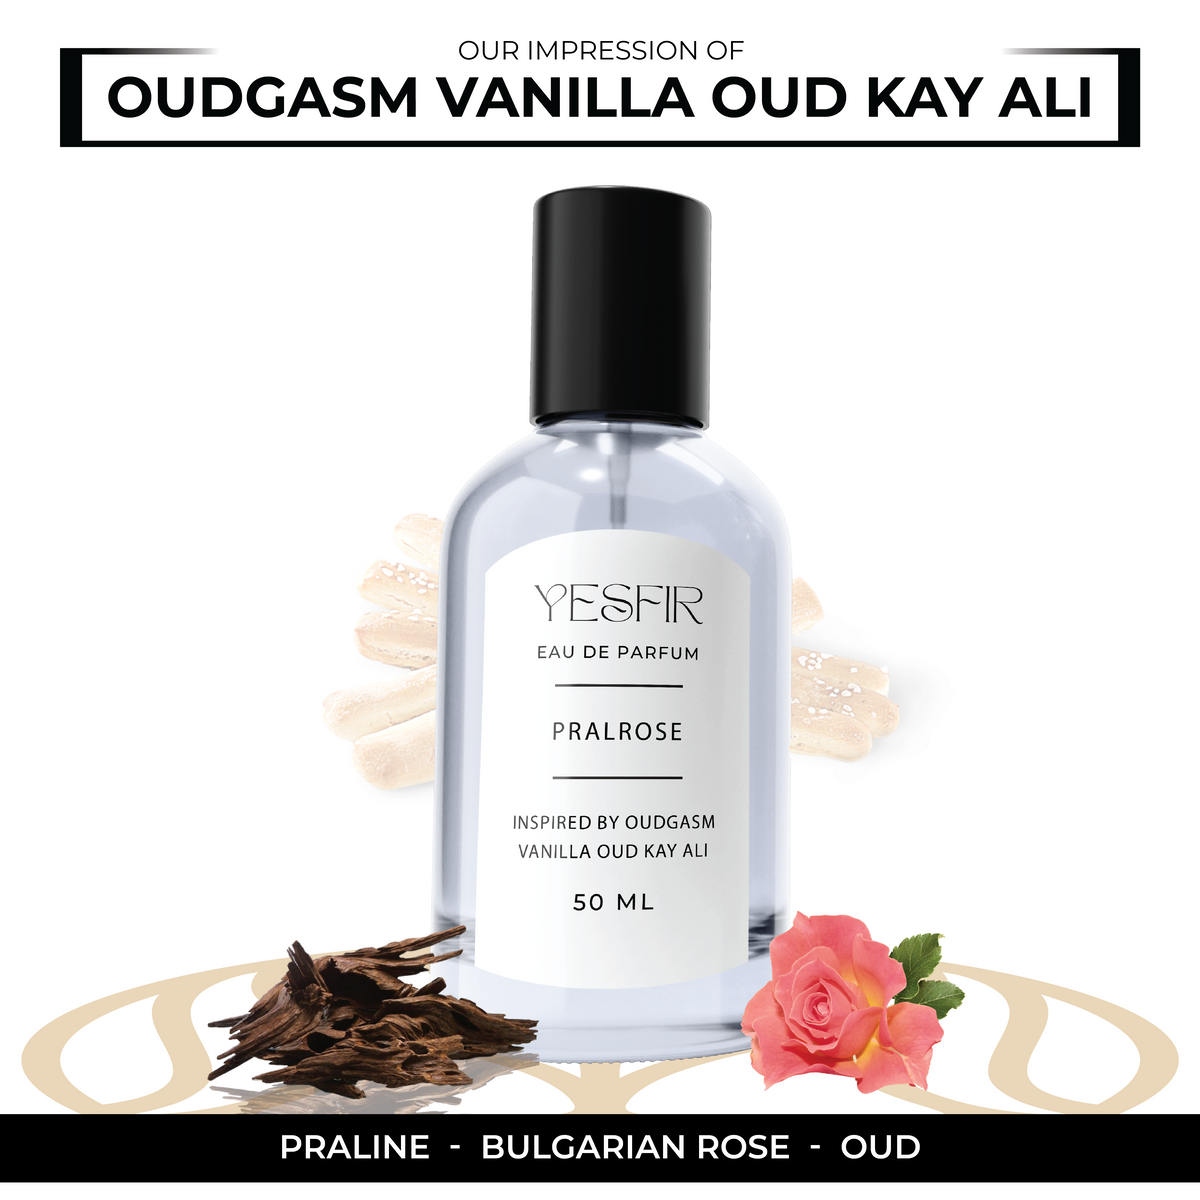 Pralrose - Inspired by Oudgasm Vanilla Oud Kay Ali